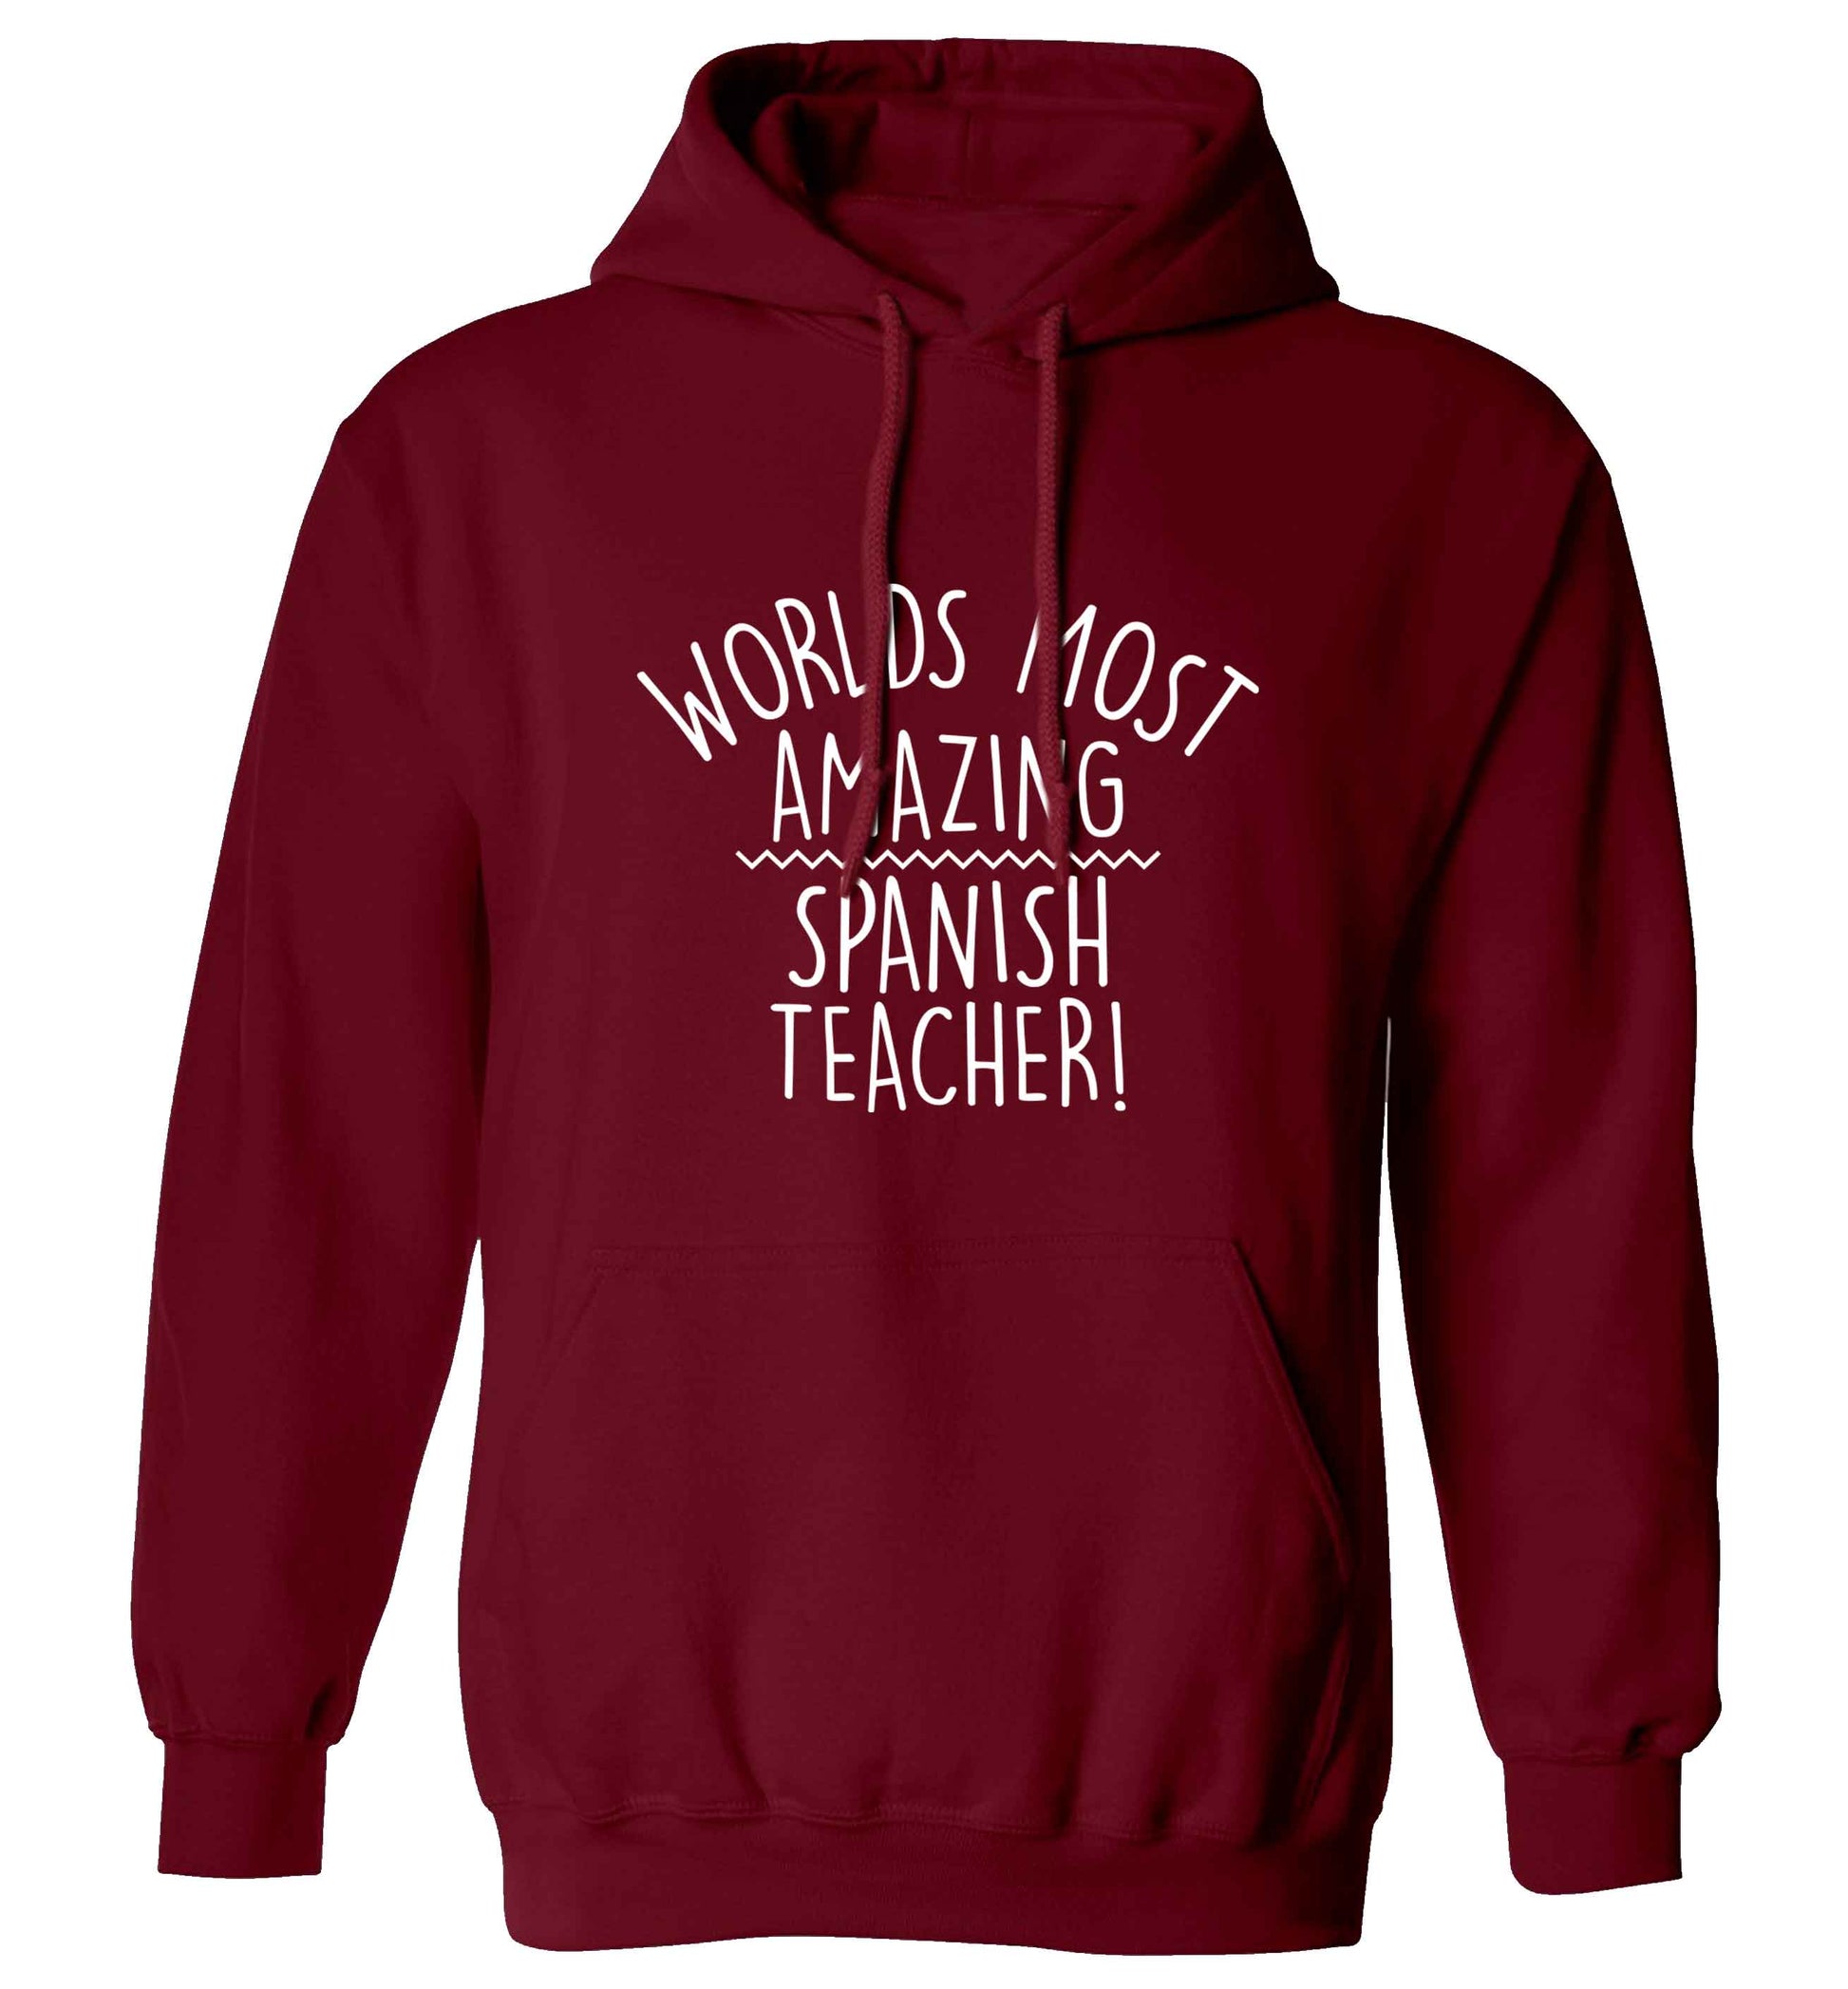 Worlds most amazing Spanish teacher adults unisex maroon hoodie 2XL